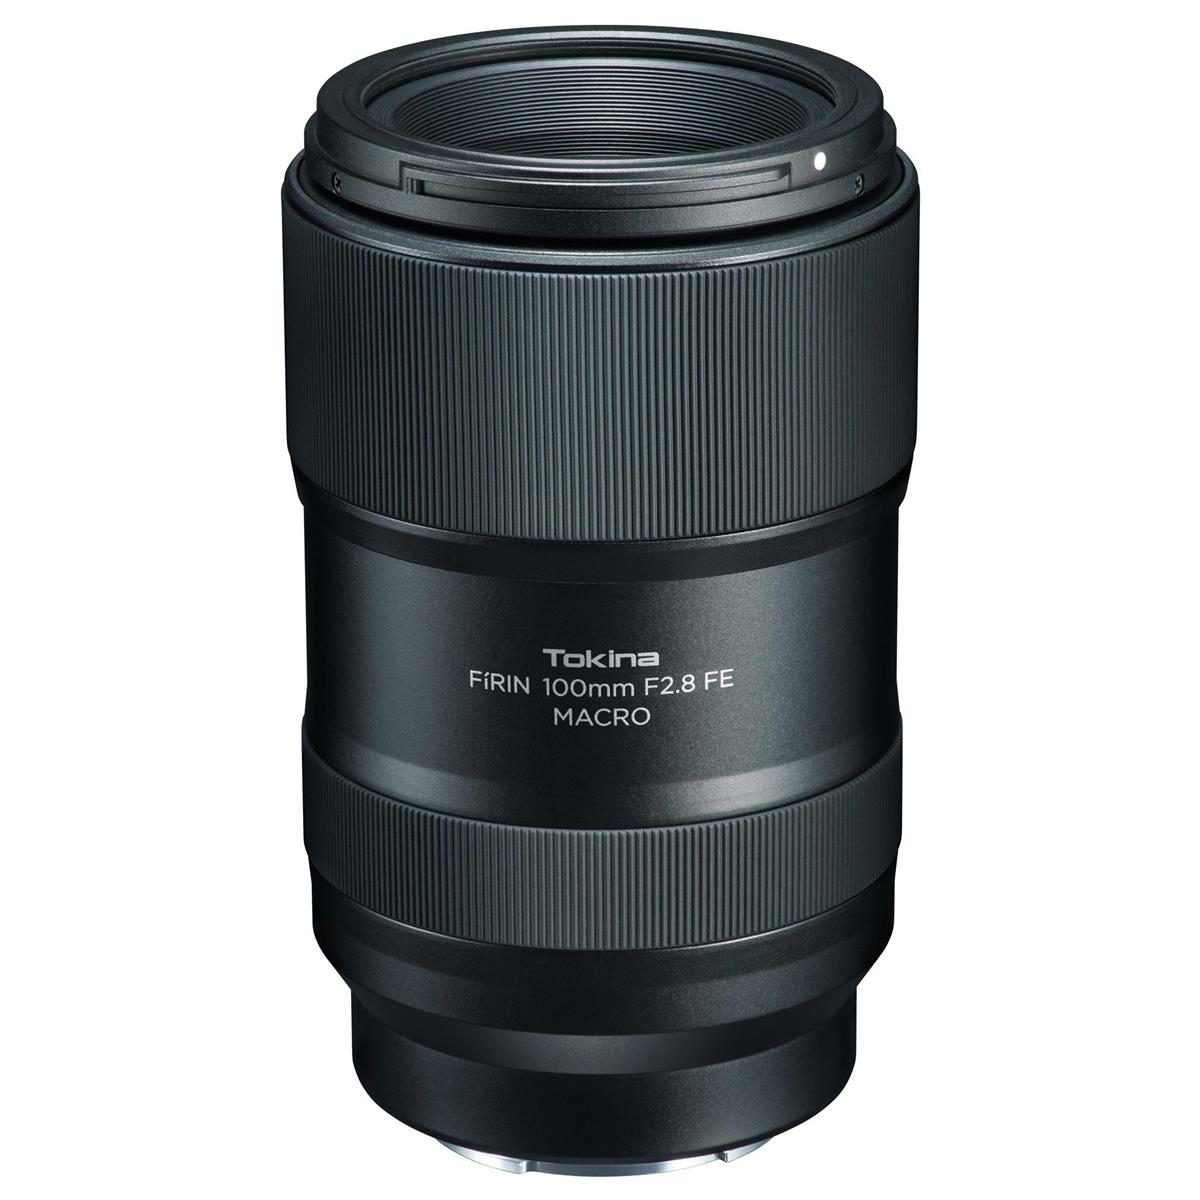 Tokina FiRIN AF 100mm f/2.8 FE Macro Lens for Sony E -  FRN-AFM100FXSE